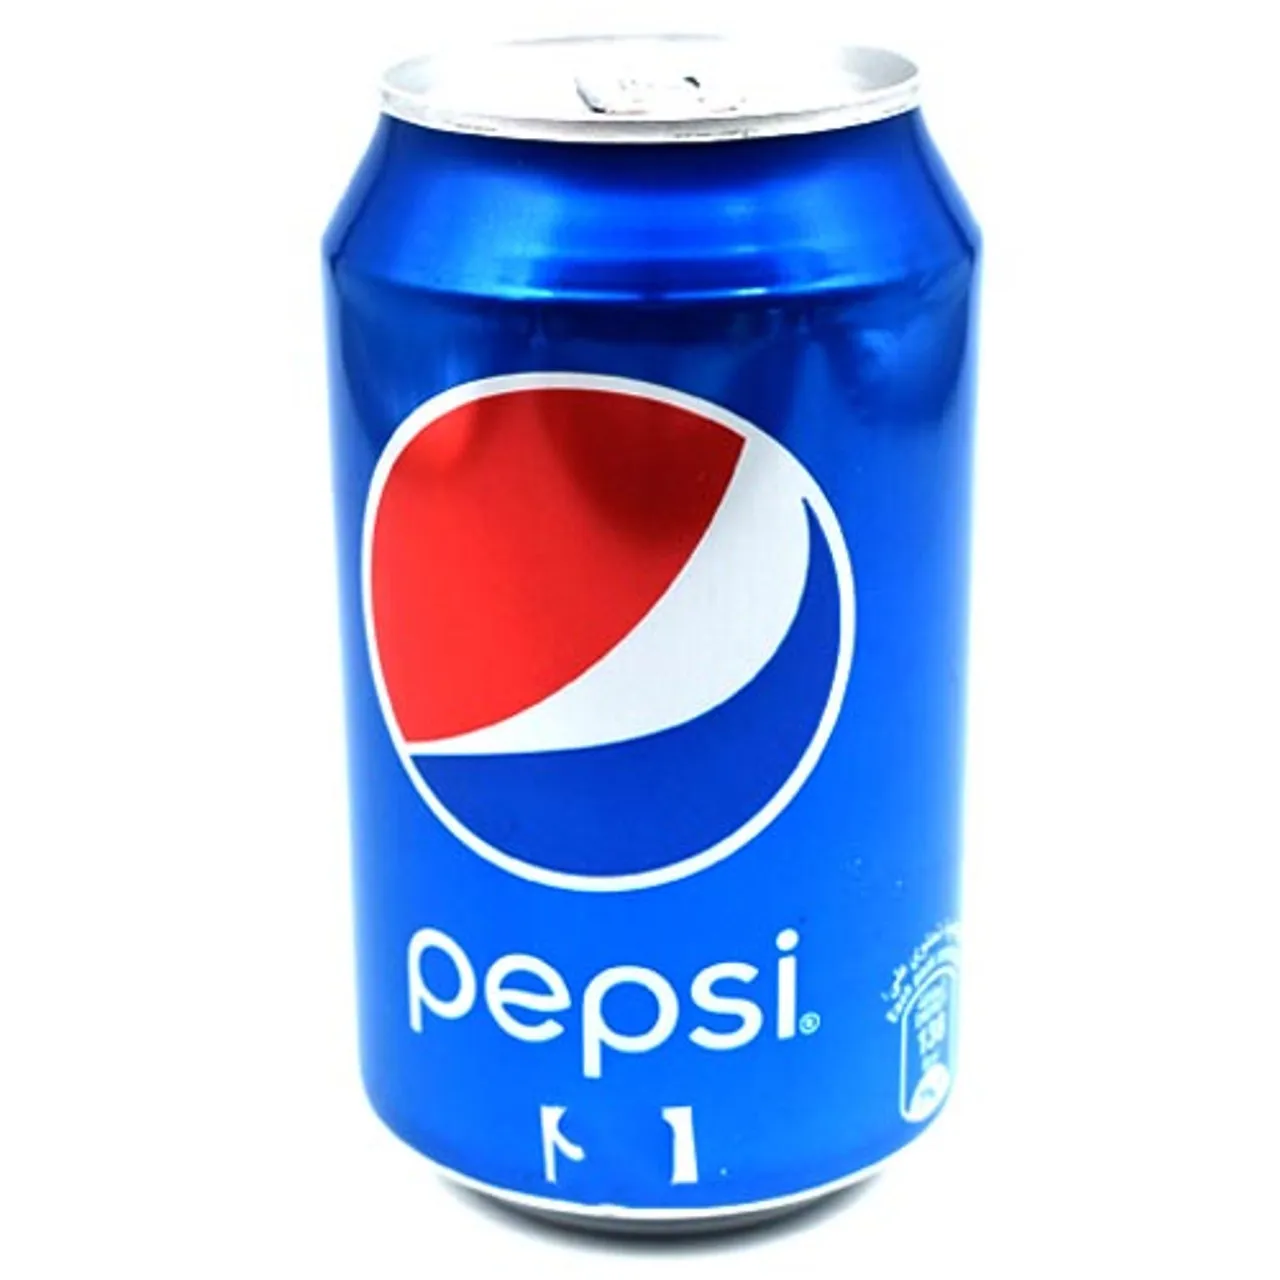 Pepsi Soft Drink Pepsi 330ml 24 Cans / Pepsi Cola 0.33l Can - Buy Pepsi ...